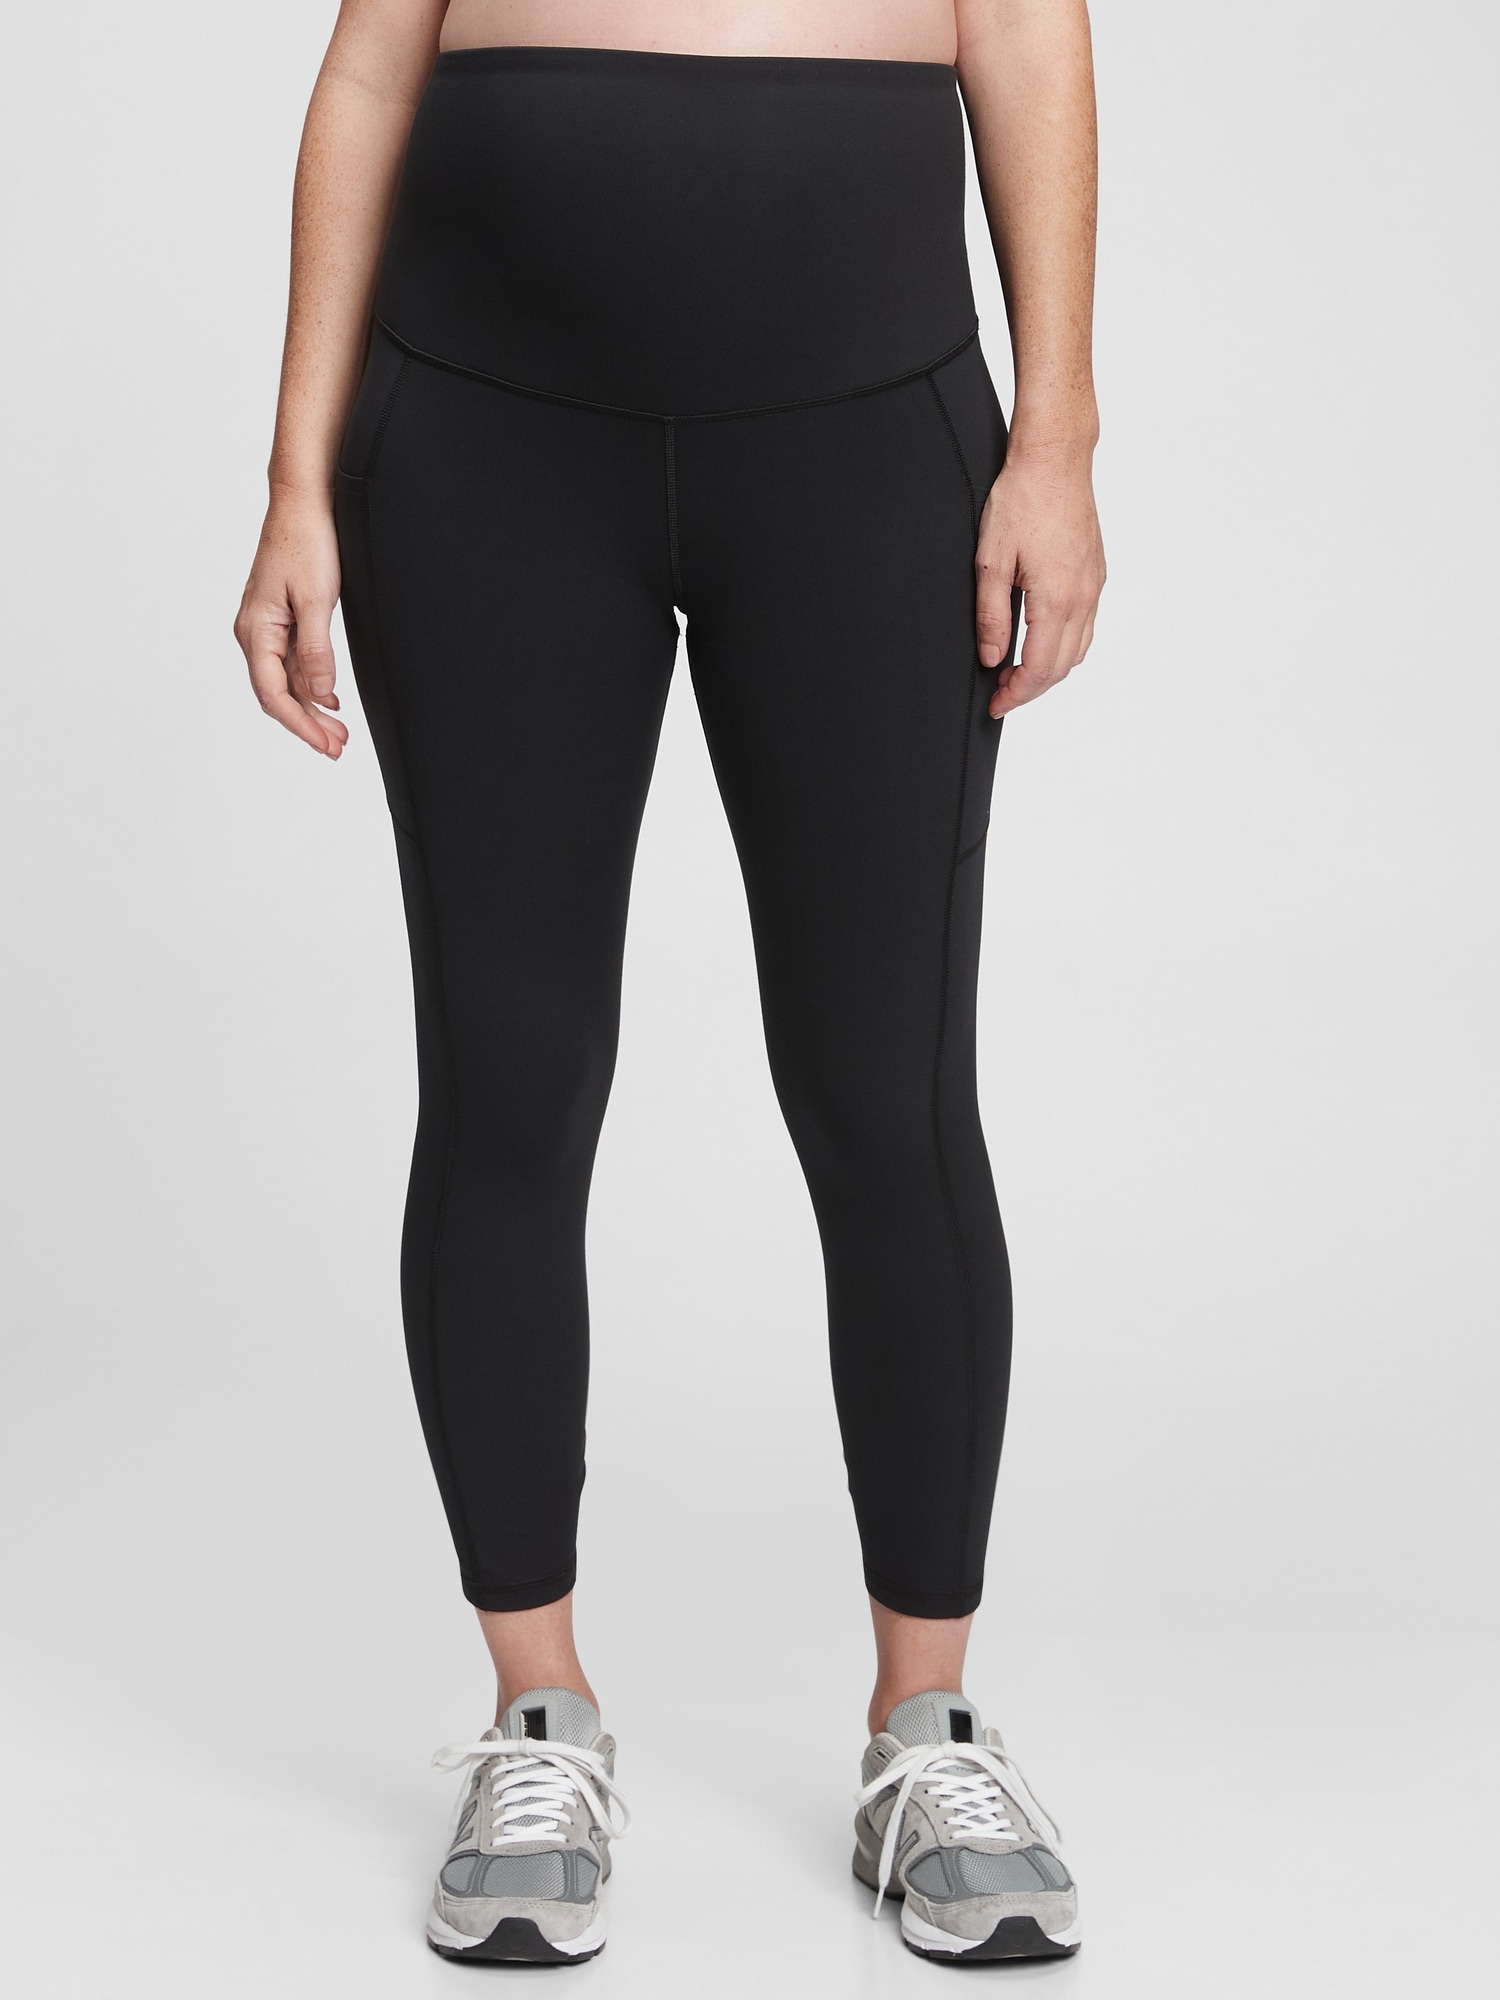 Yogalicious Polka Dots Black Yoga Pants Size M - 66% off